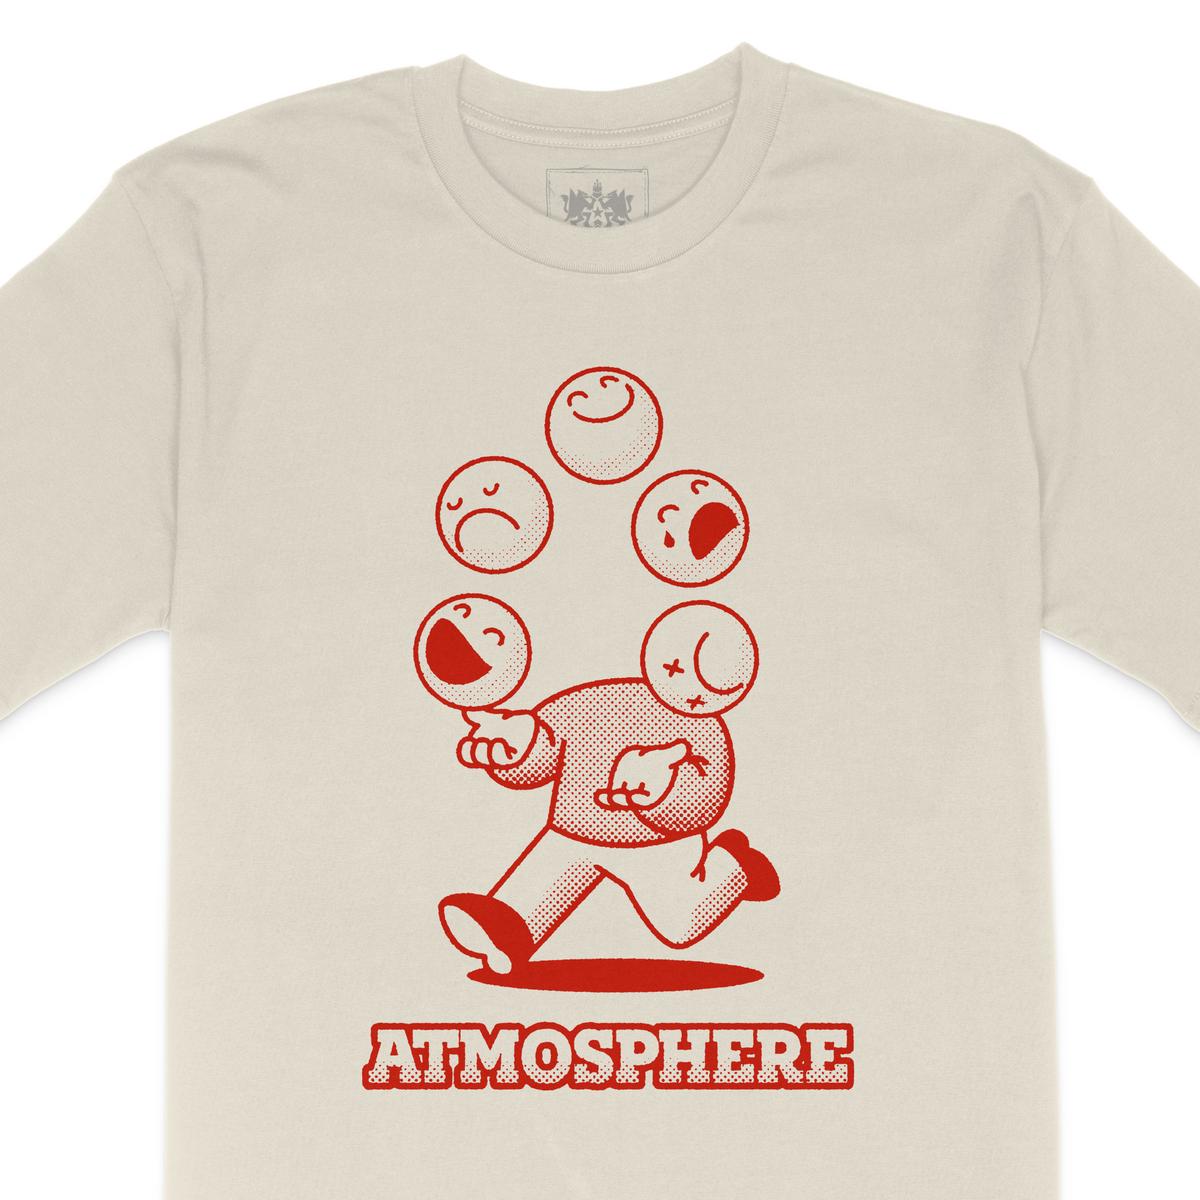 Atmosphere - Juggle Shirt